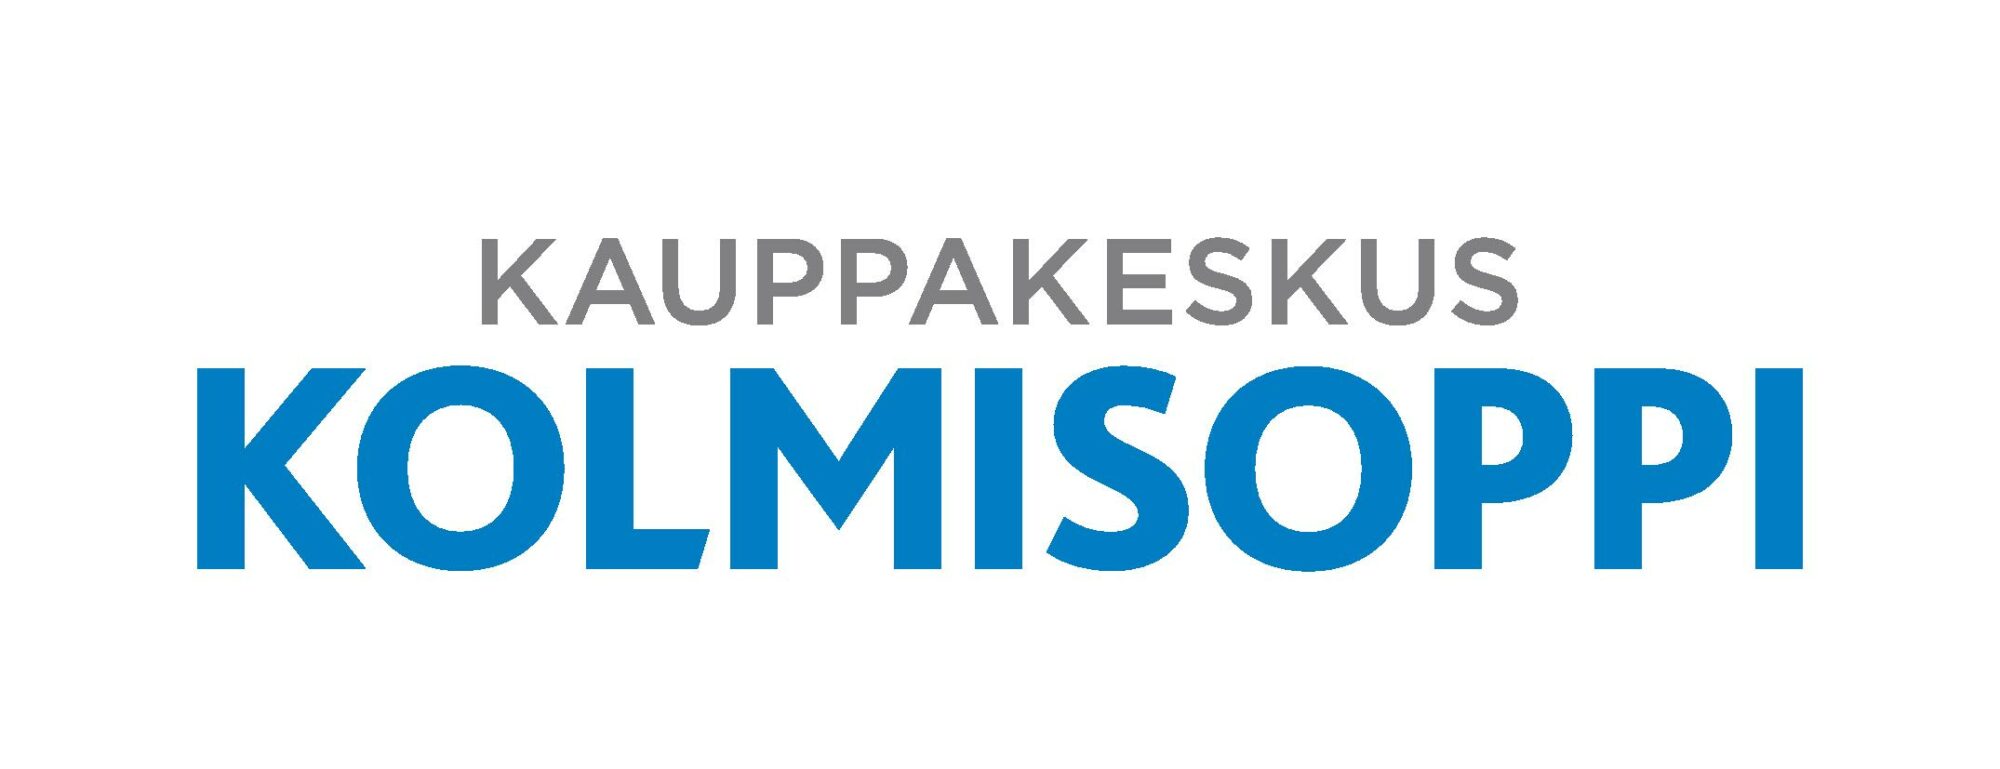 Kaupppakeskus KOLMISOPPI -logo